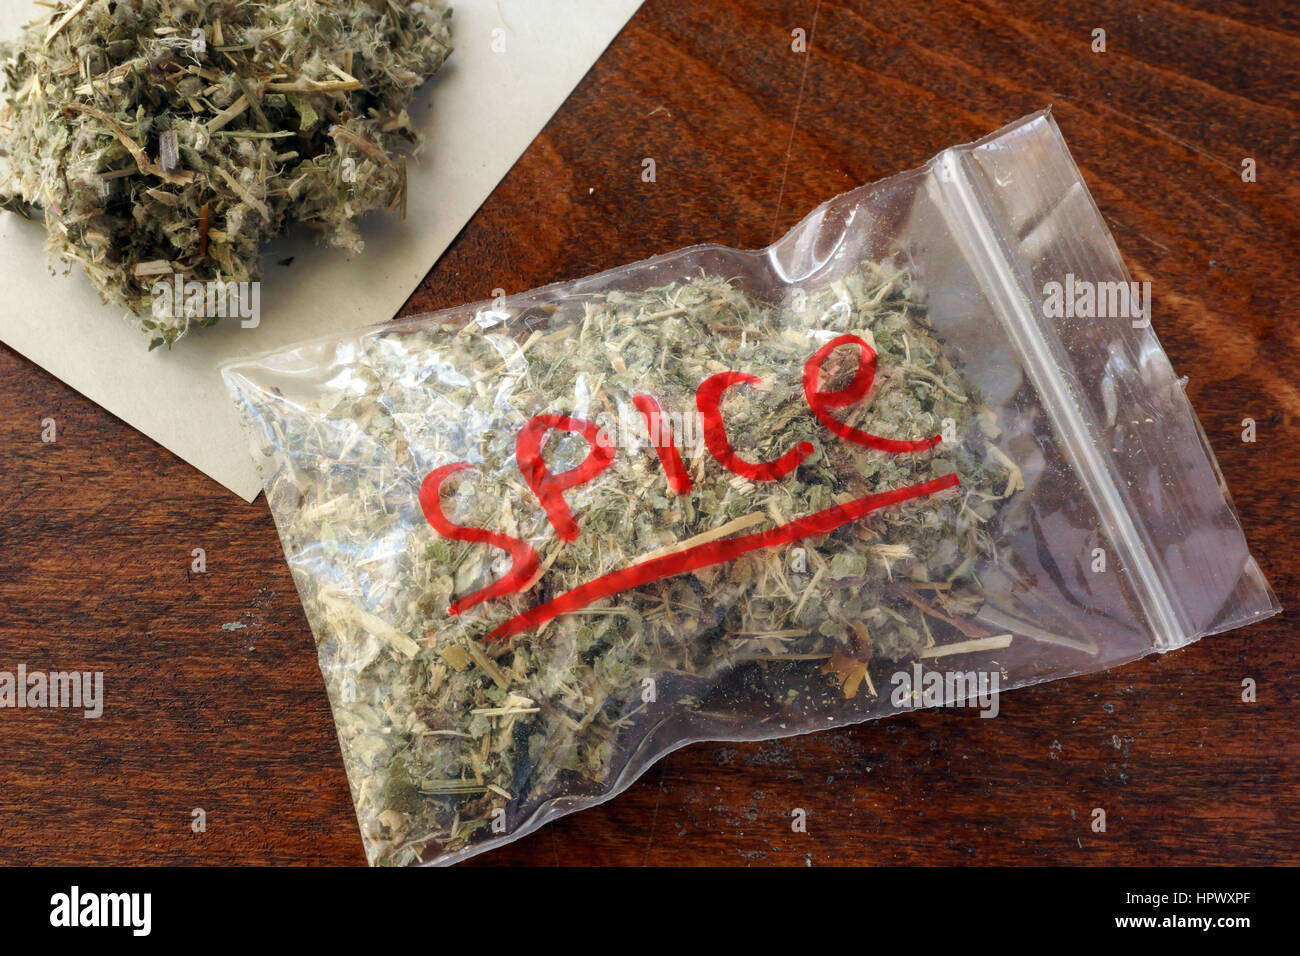 Plastic bag of marijuana on a table. Stock Photo